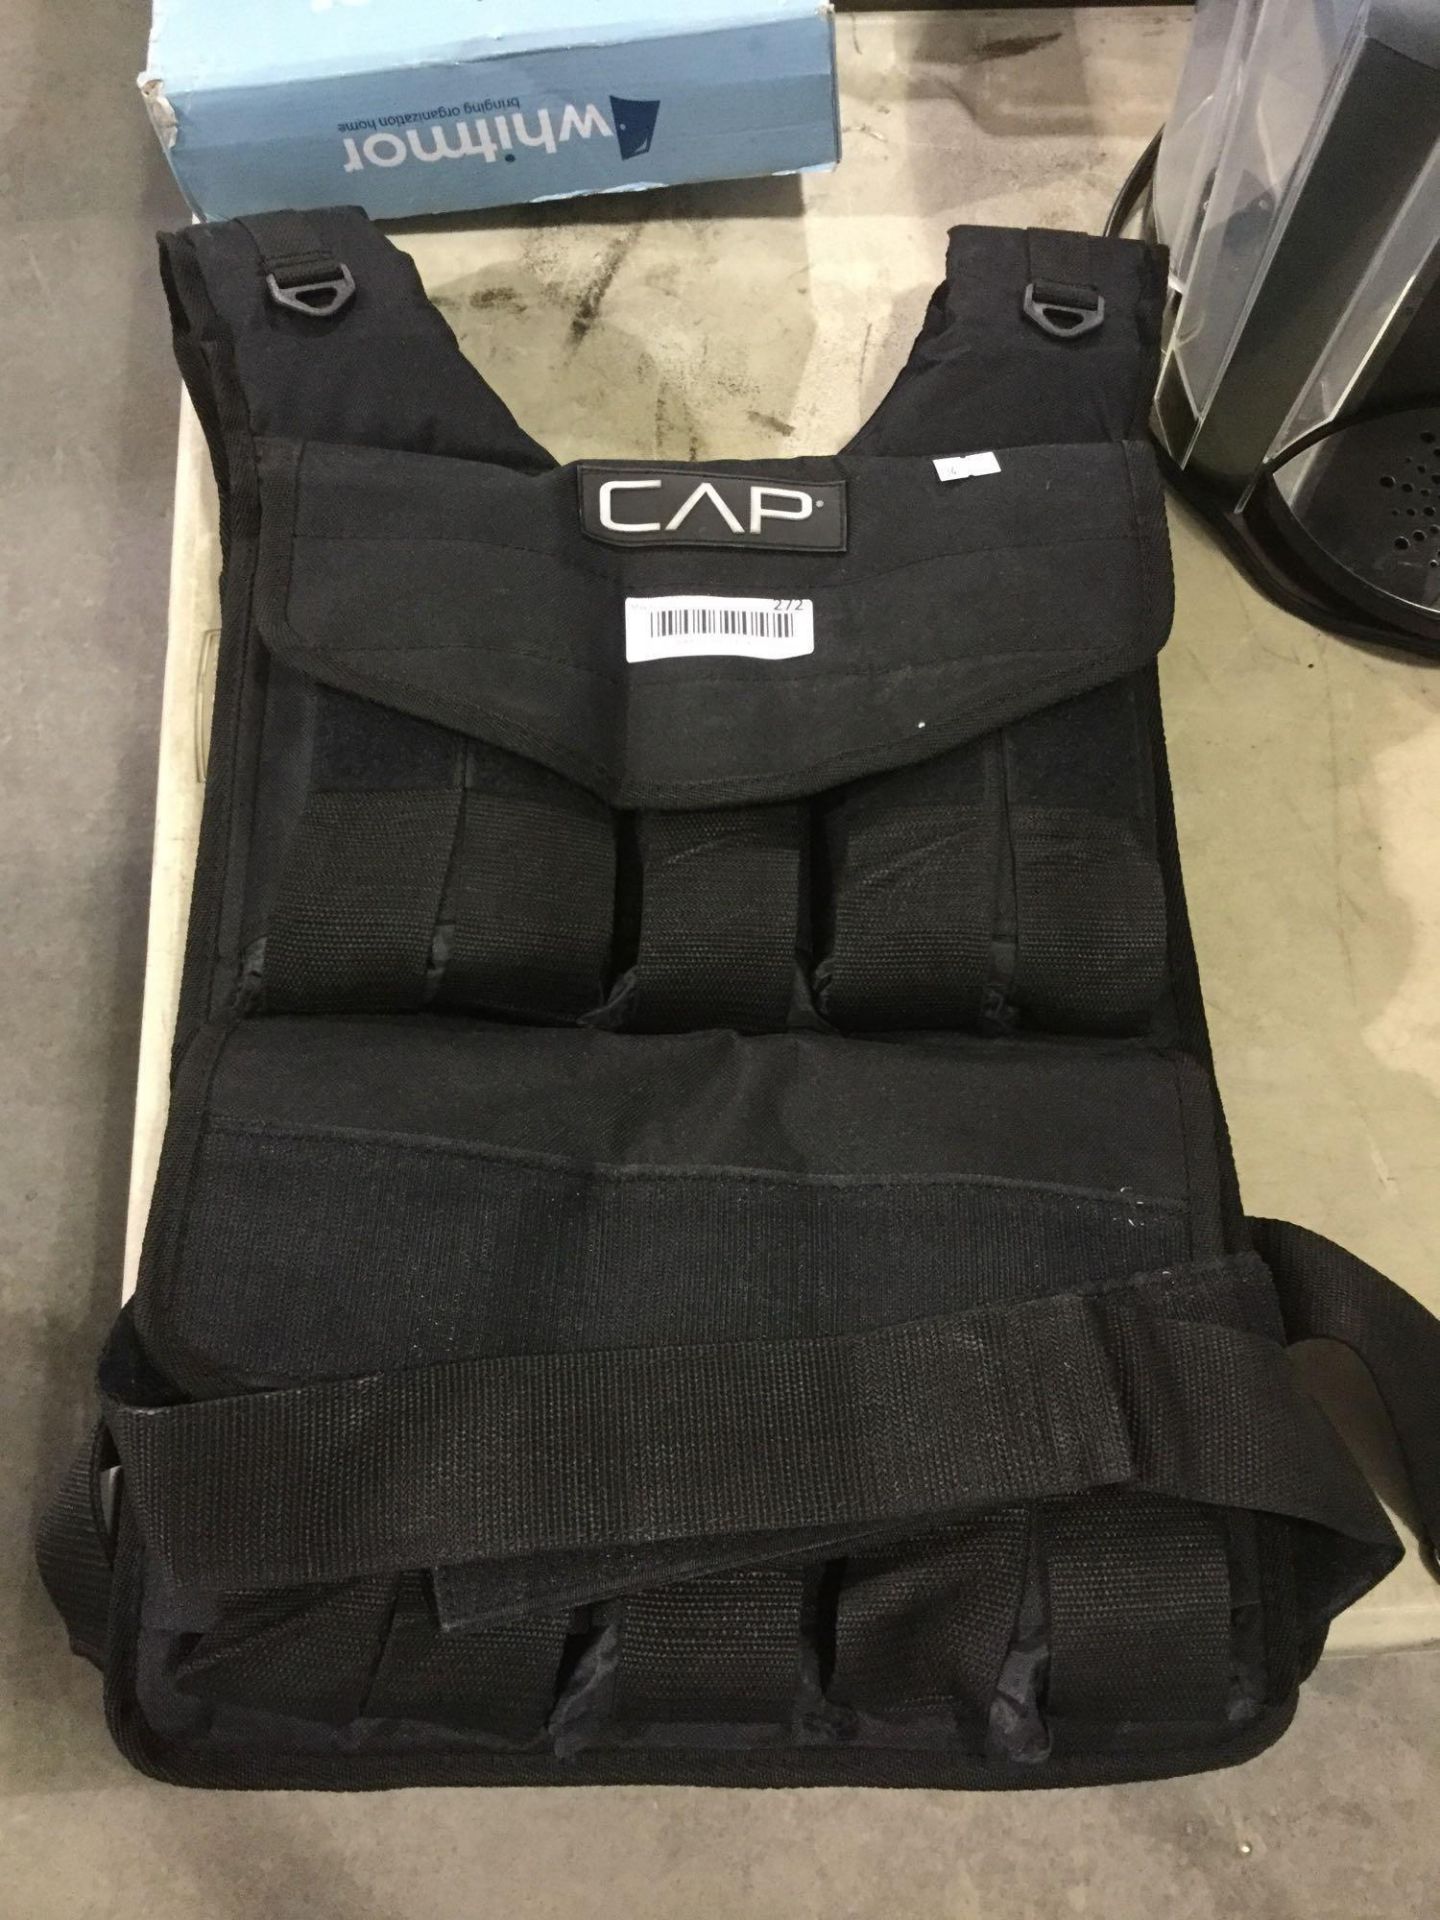 CAP 80lb Weighted Vest